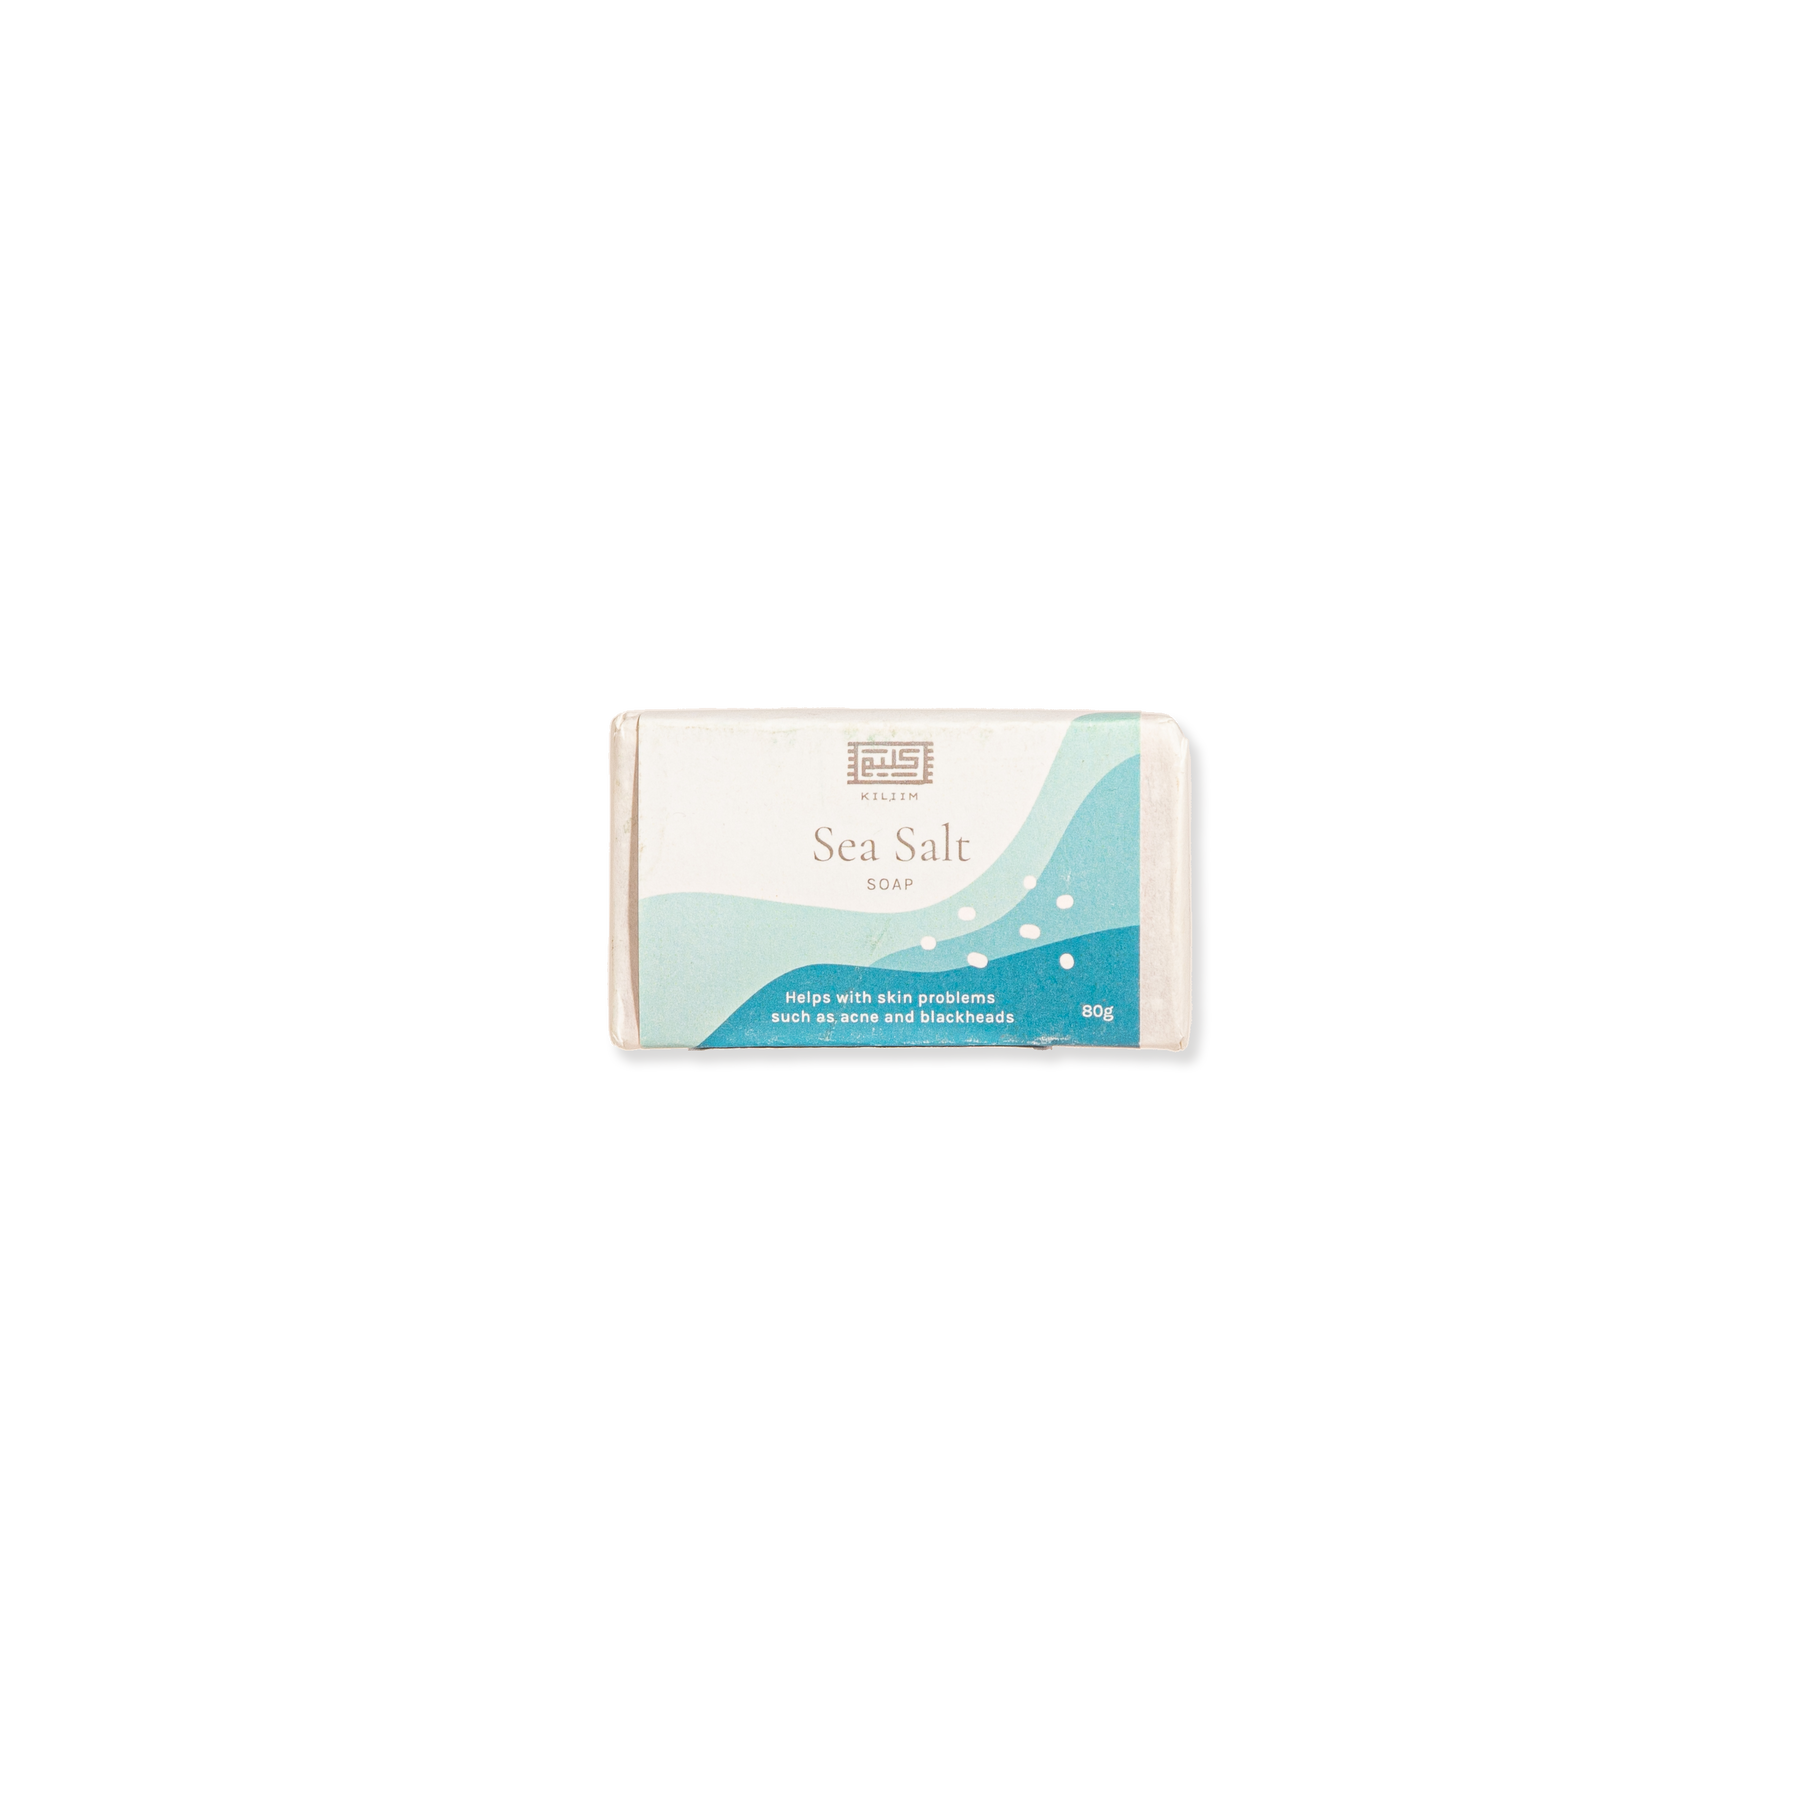 Sea salt soap bar